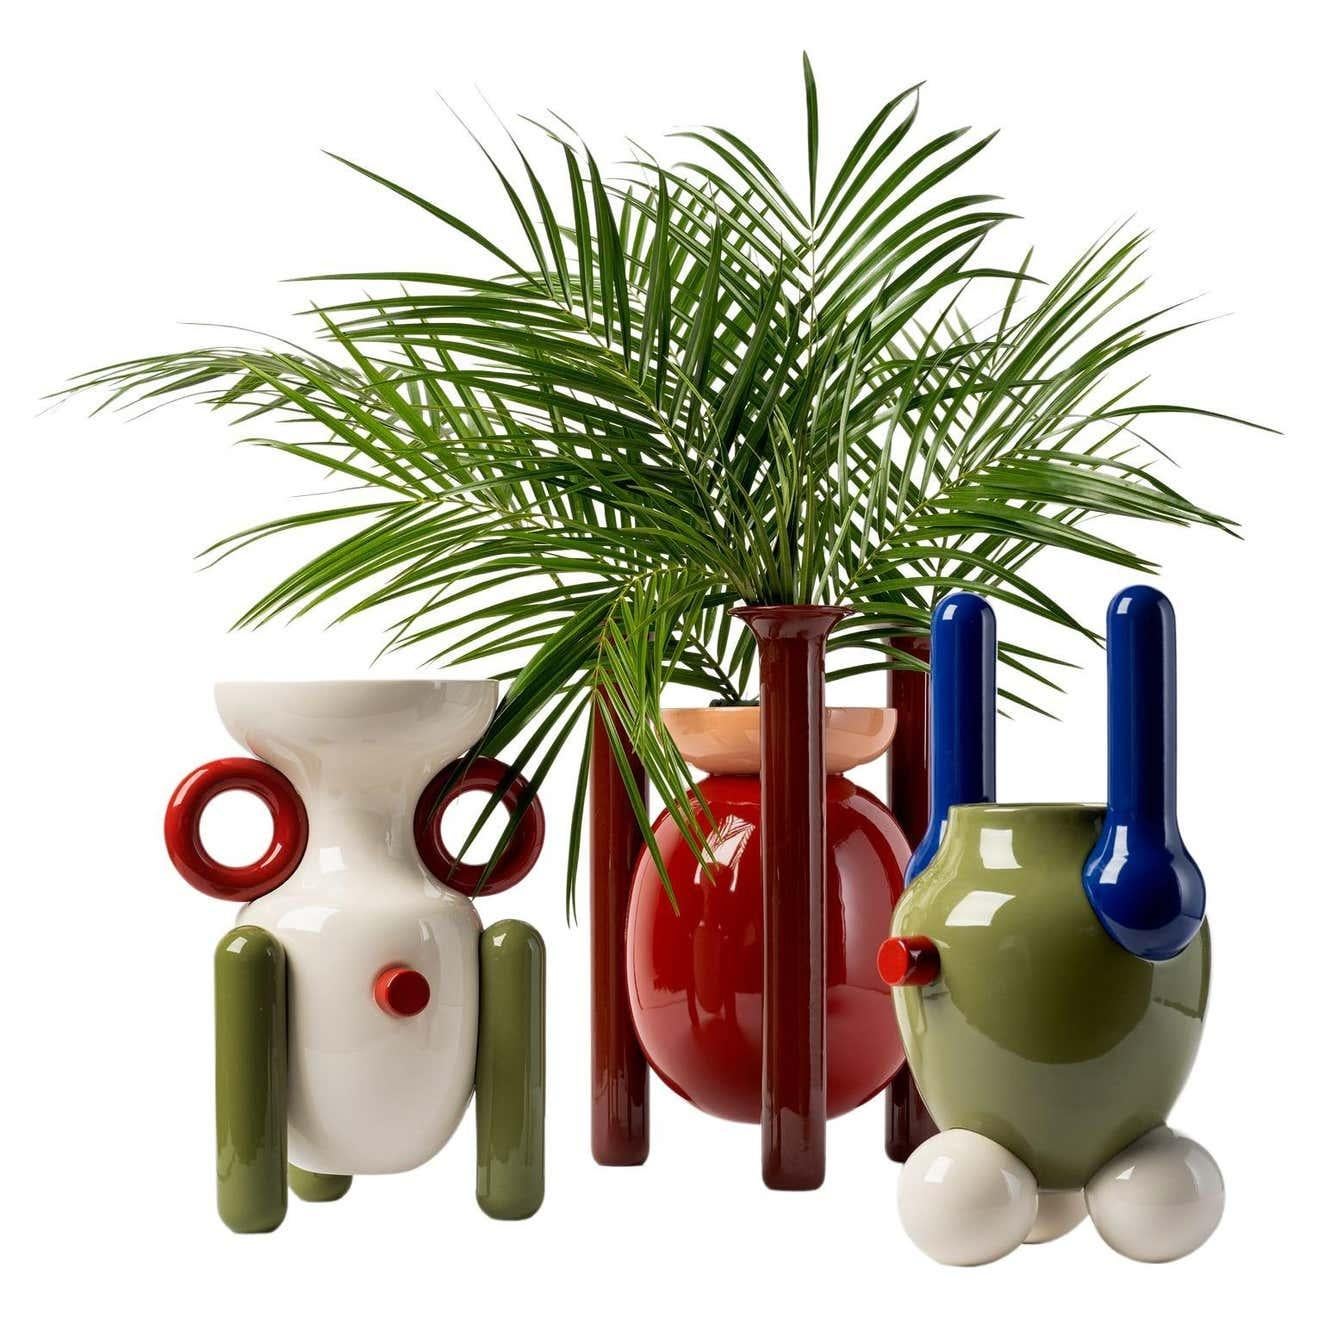 Set of 3 Contemporary decor glazed ceramic explorer vase collection.

Materials: 
Ceramic

Dimensions: 
Nº1: D 23 cm x W 23 cm x H 40 cm
Nº2: D 25 cm x W 25 cm x H 35 cm
Nº3: D 30 cm x W 30 cm x H 40 cm

The Showtime Vases are just as